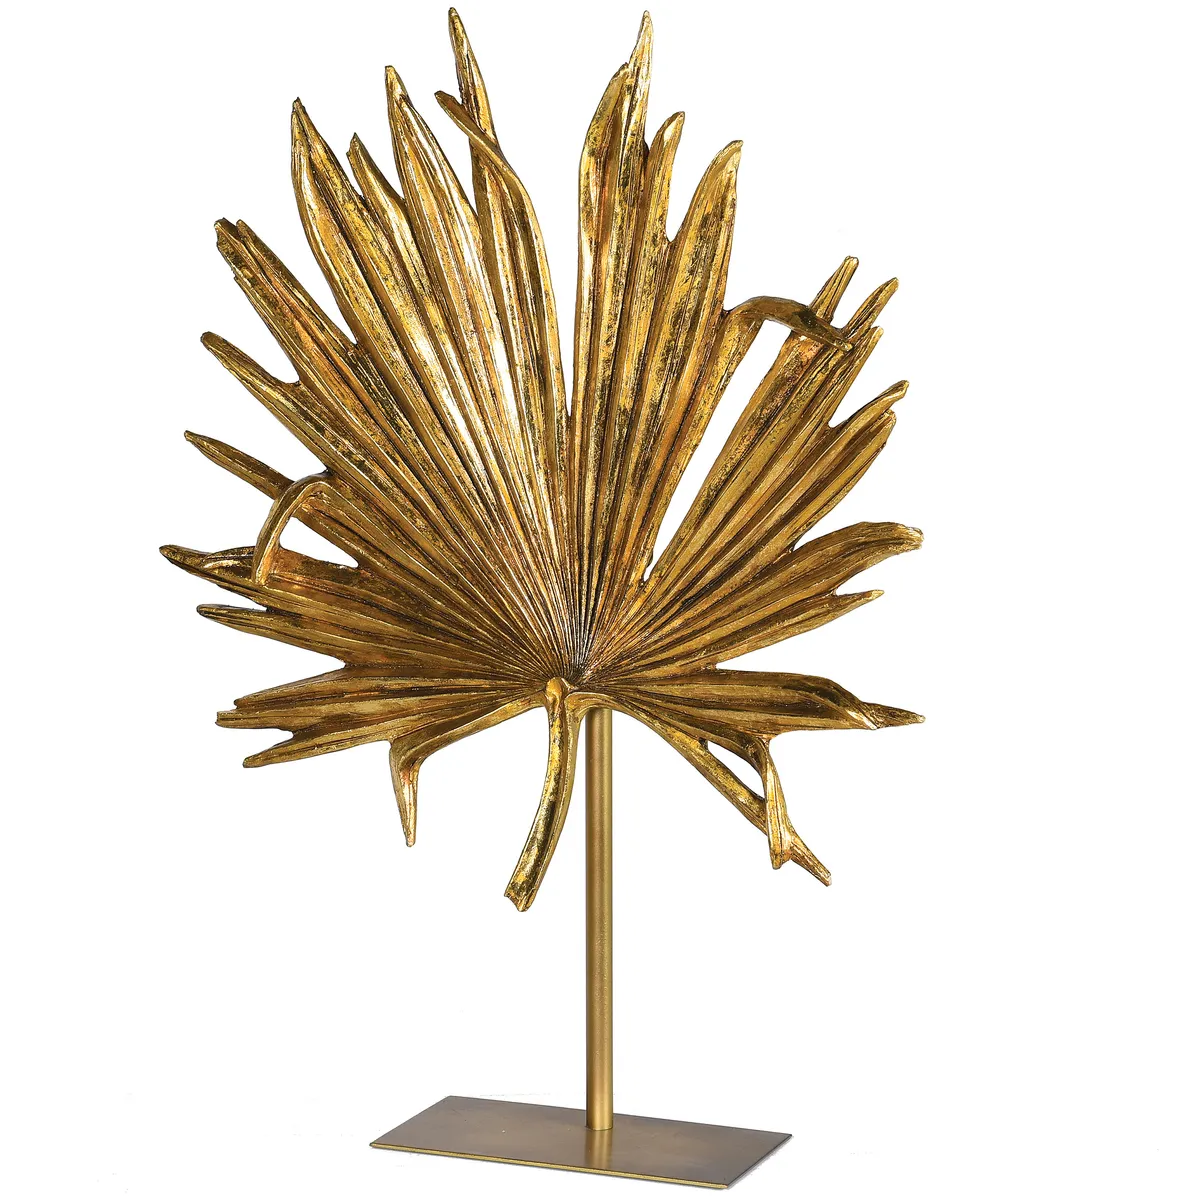 Golden palm leaf ornament, £114, Audenza